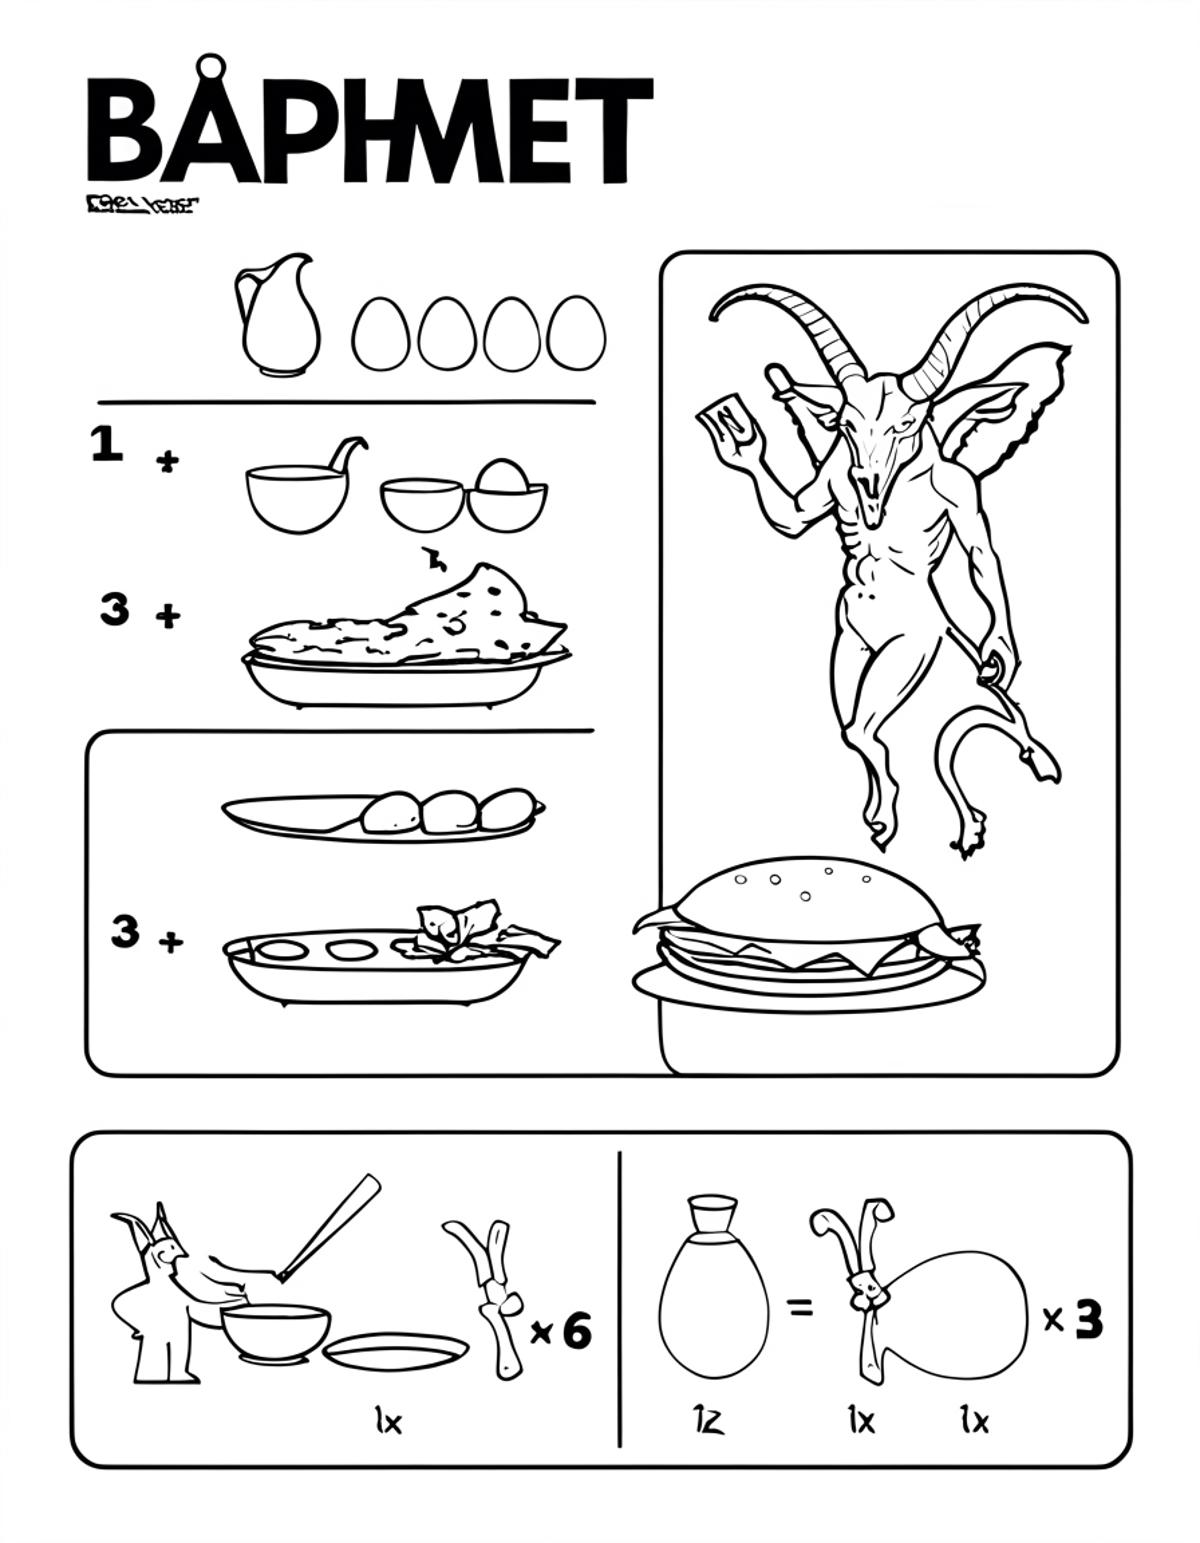 Ikea Instructions - LoRA - SDXL image by zero01101